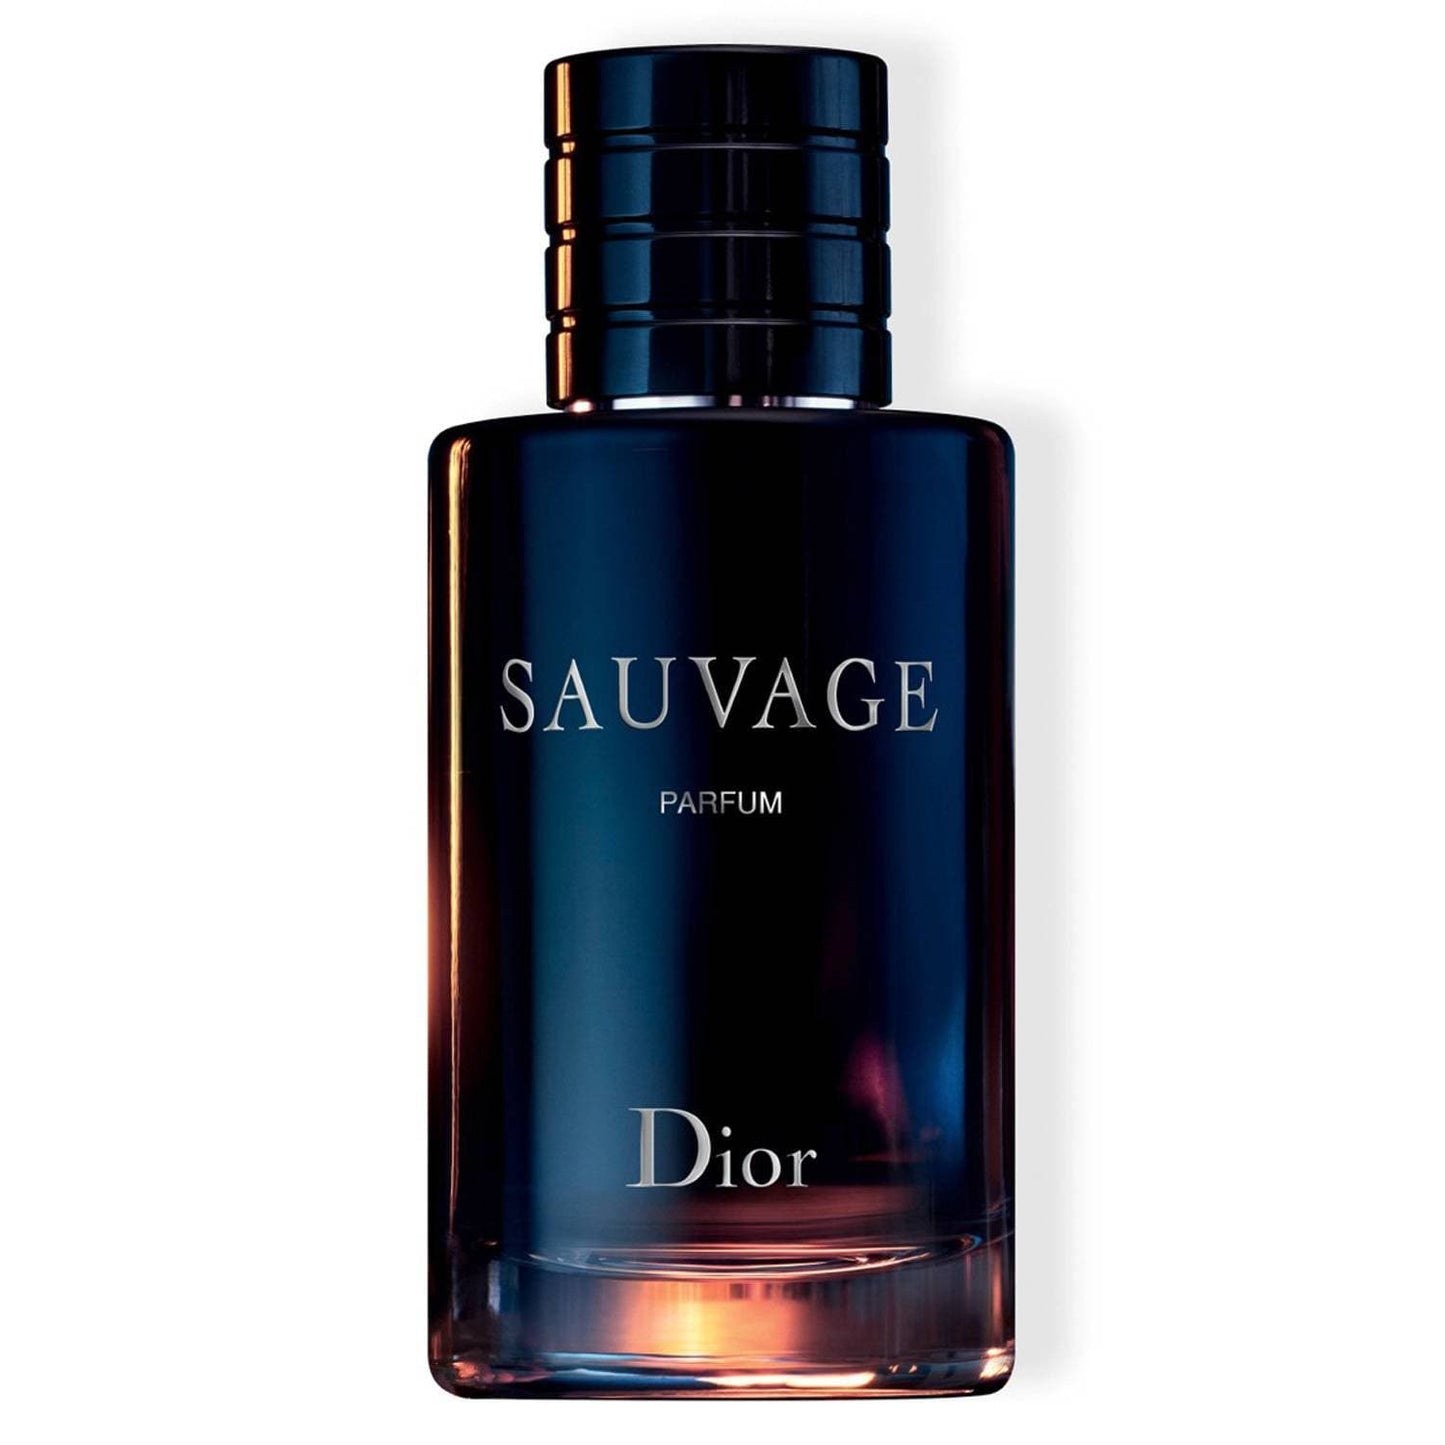 Dior - Sauvage PARFUM 100ml